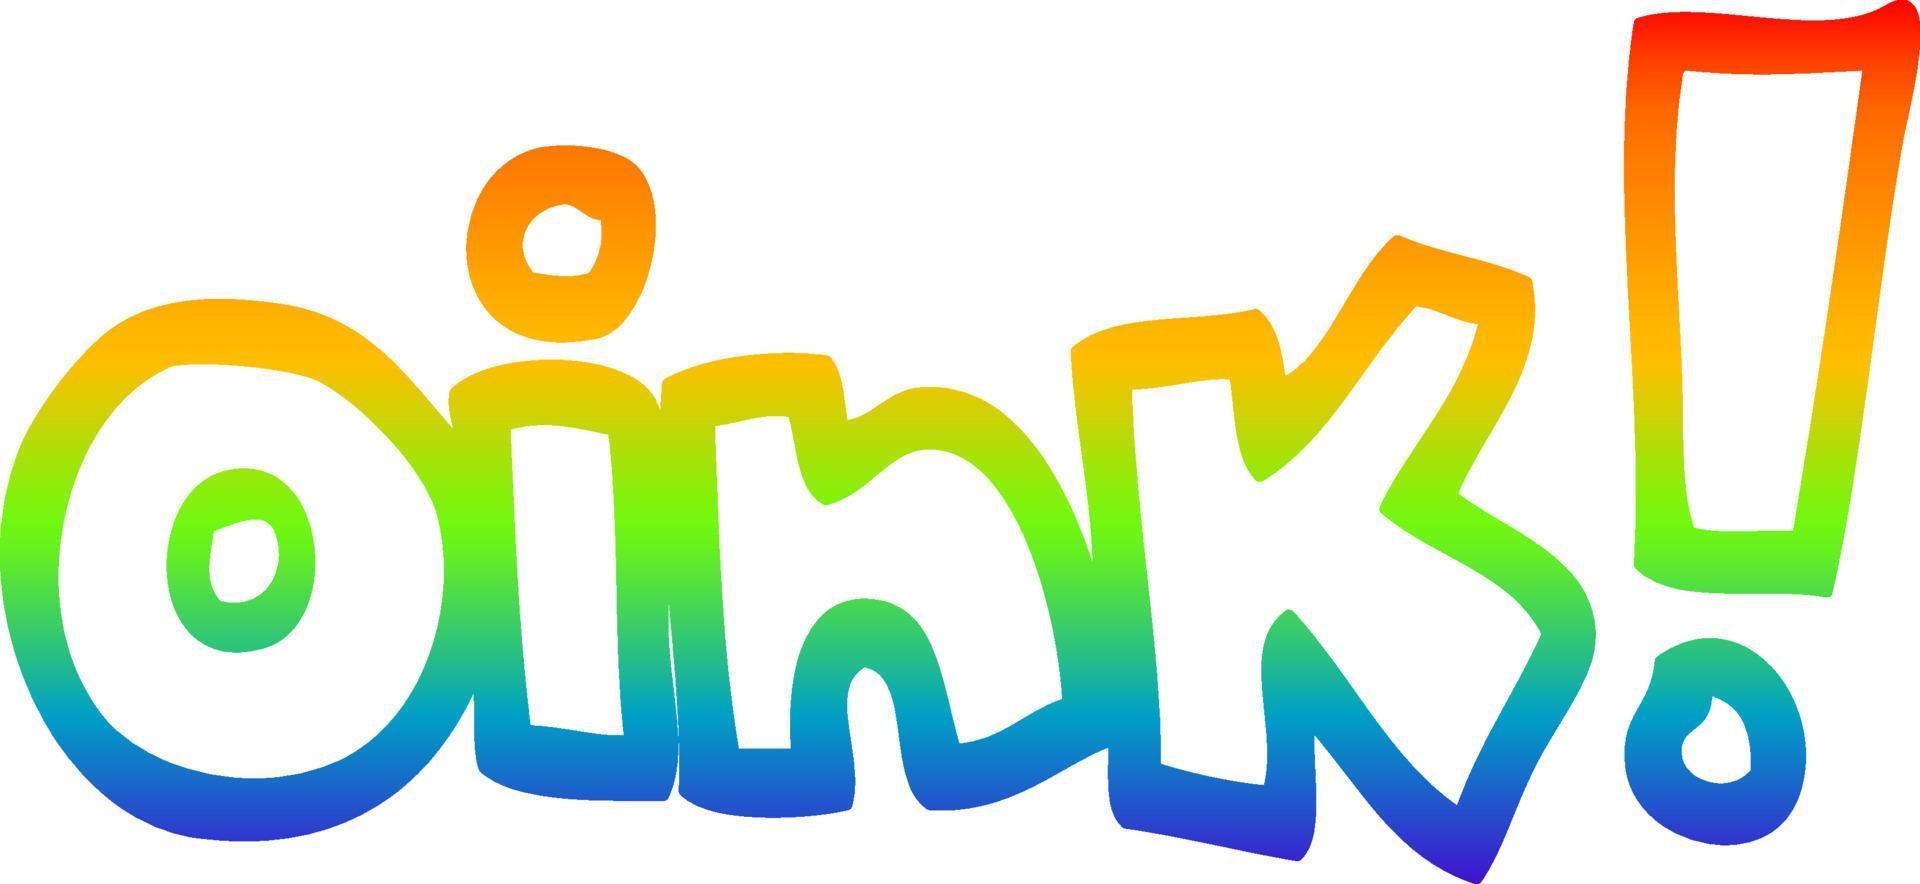 arco iris gradiente línea dibujo dibujos animados palabra oink vector